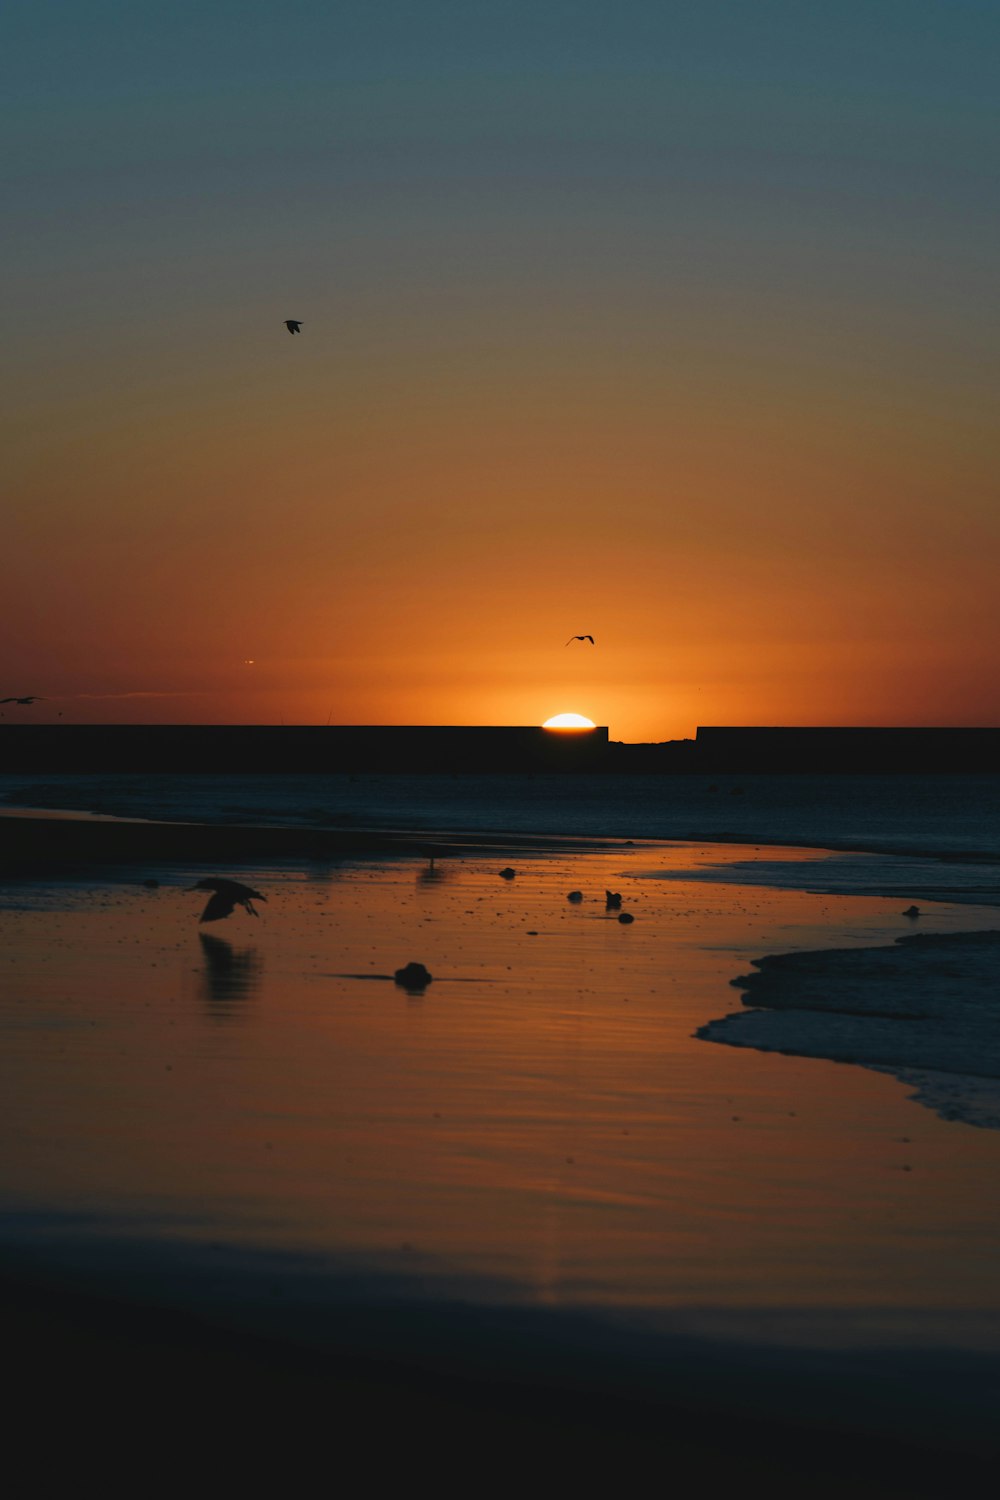 birds on beach during sunset